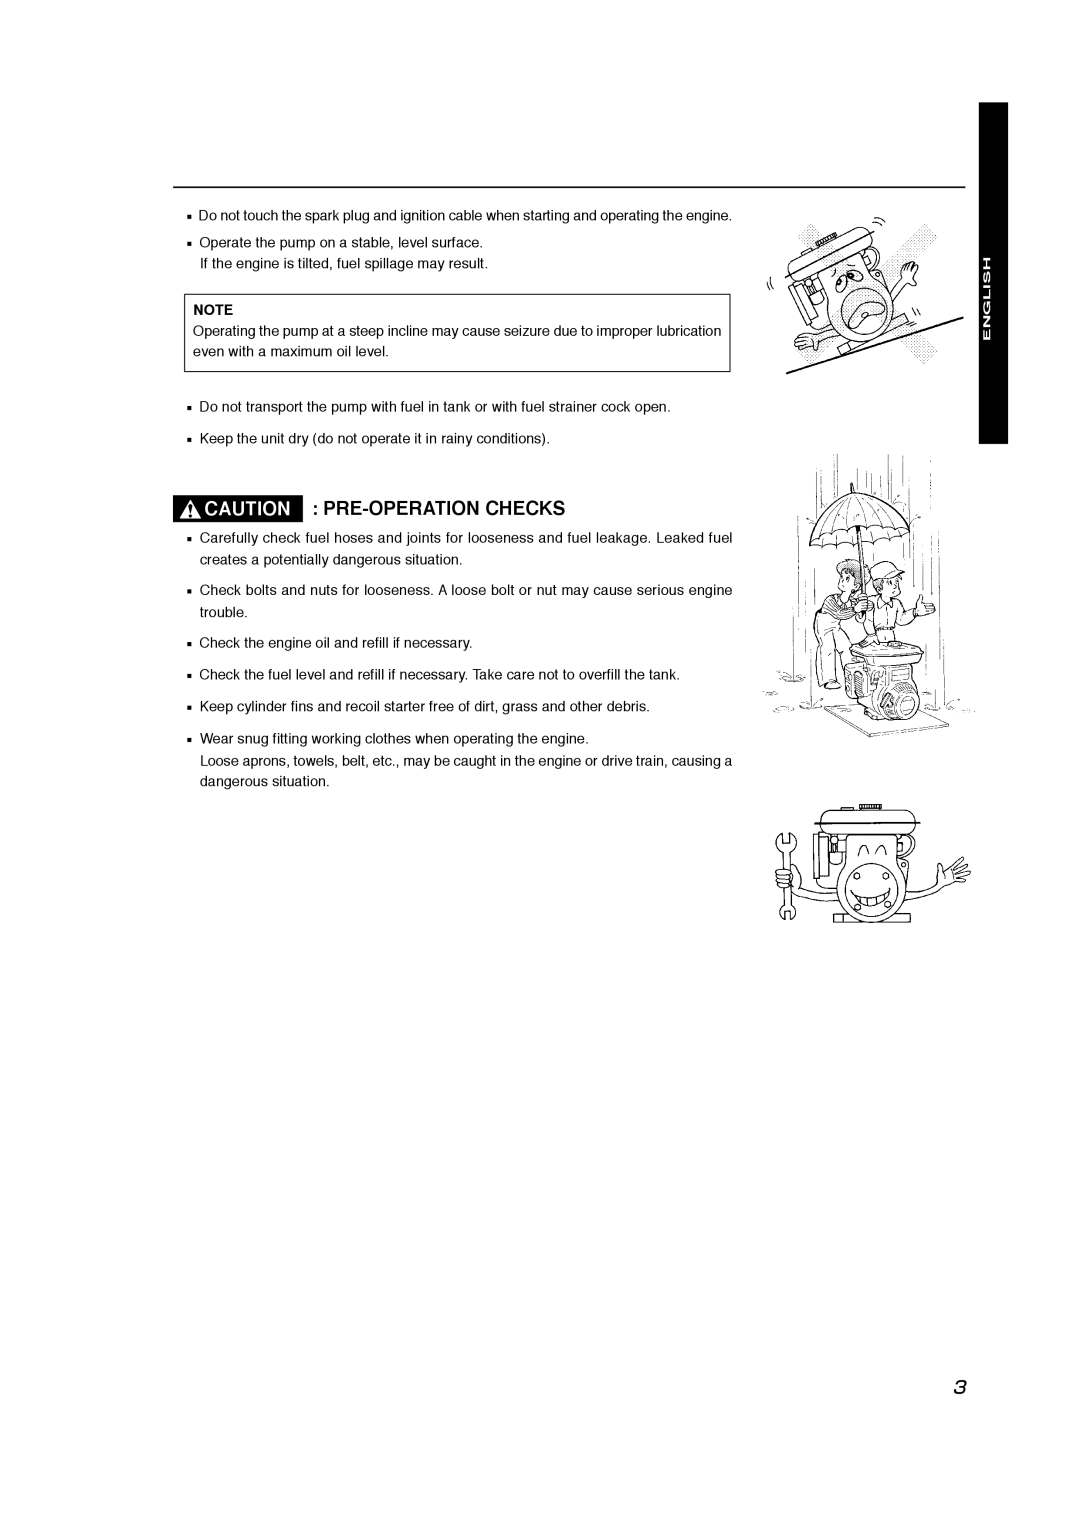 Subaru Robin Power Products PKV401T manual Caution : Pre-Operationchecks, English 